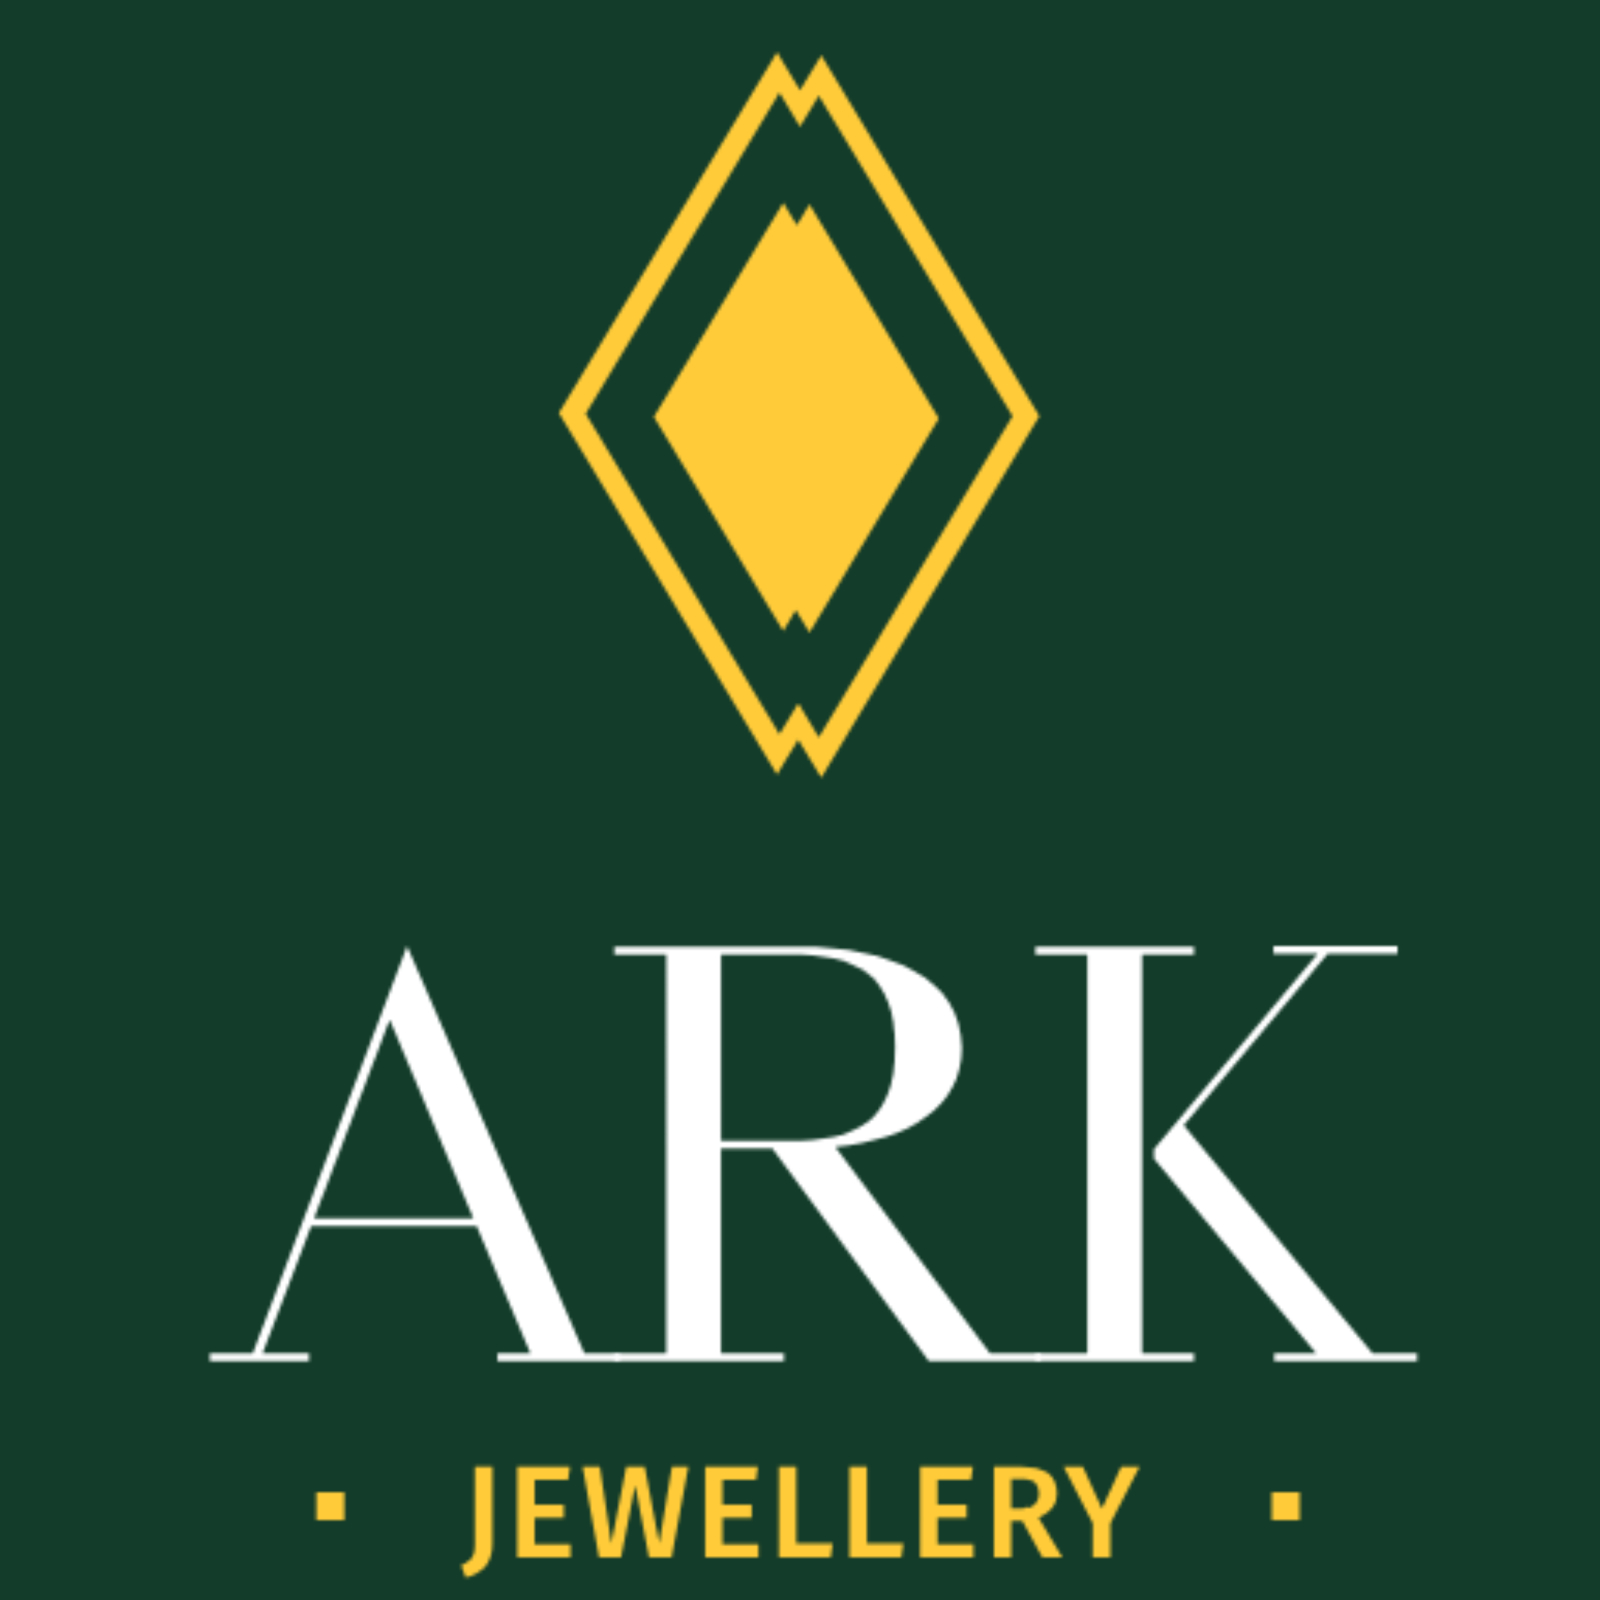 ARK Jewellery